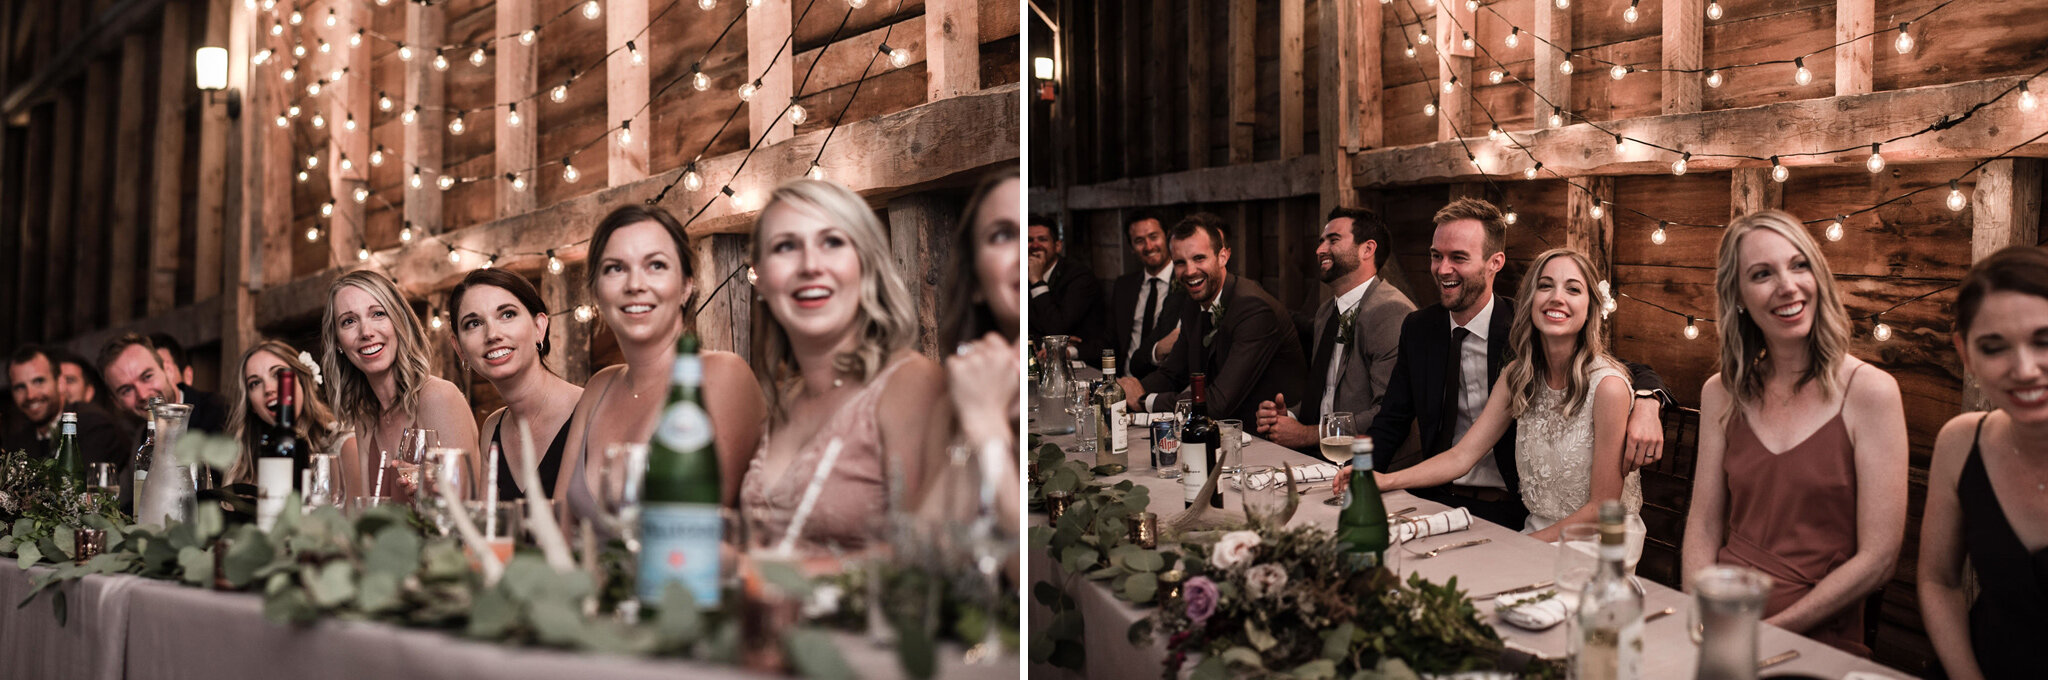 097-parents-of-groom-speech-reactions-reception-in-barn-romantic.jpg